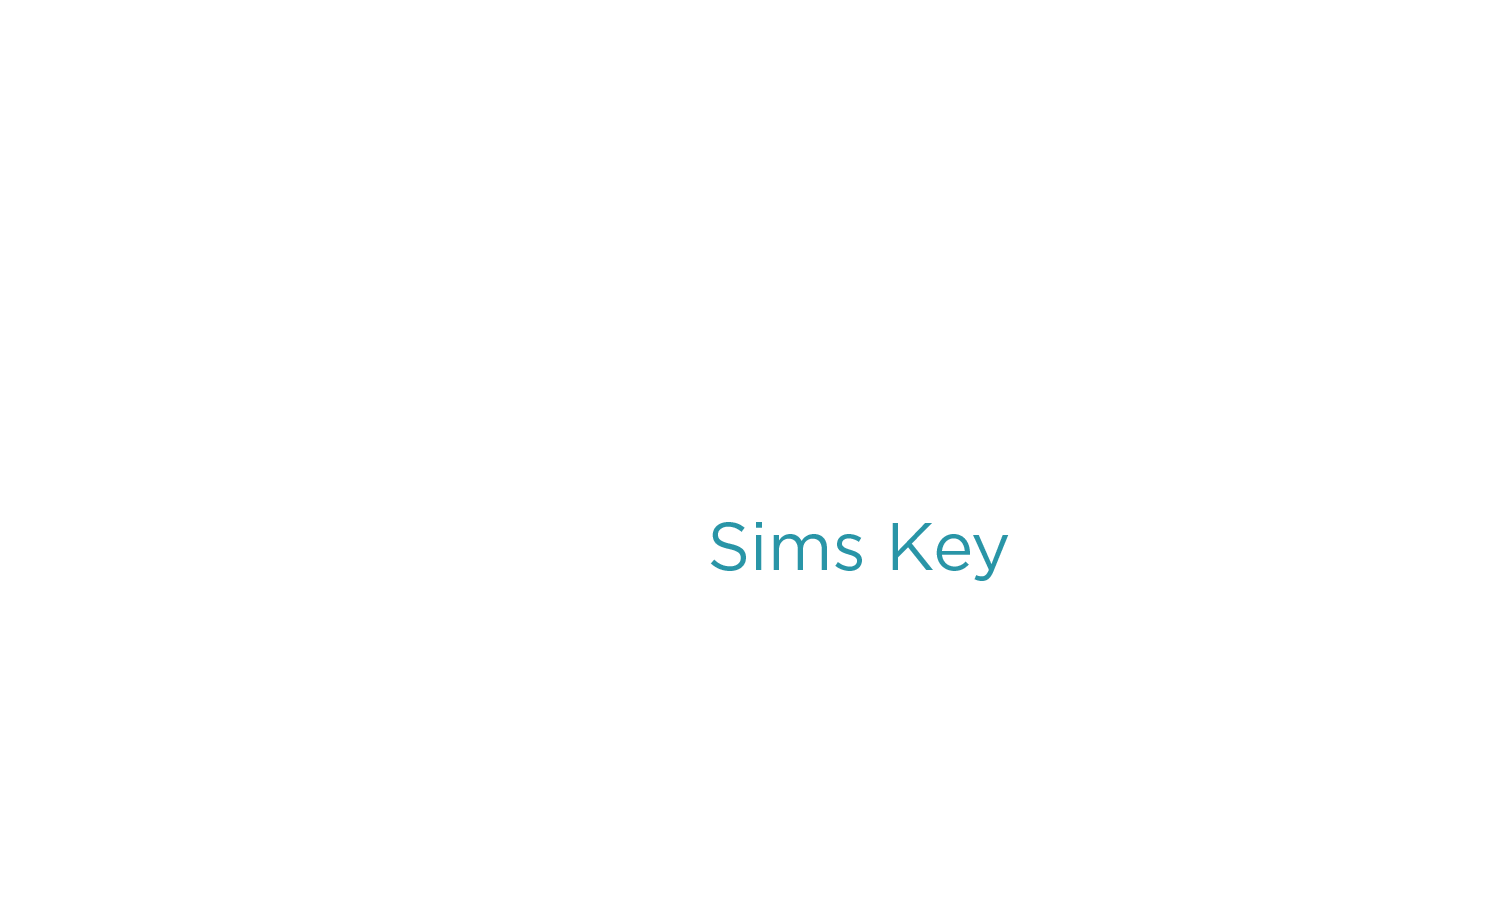 Sims Key - 5Q-Title-05-Sims-Key-01